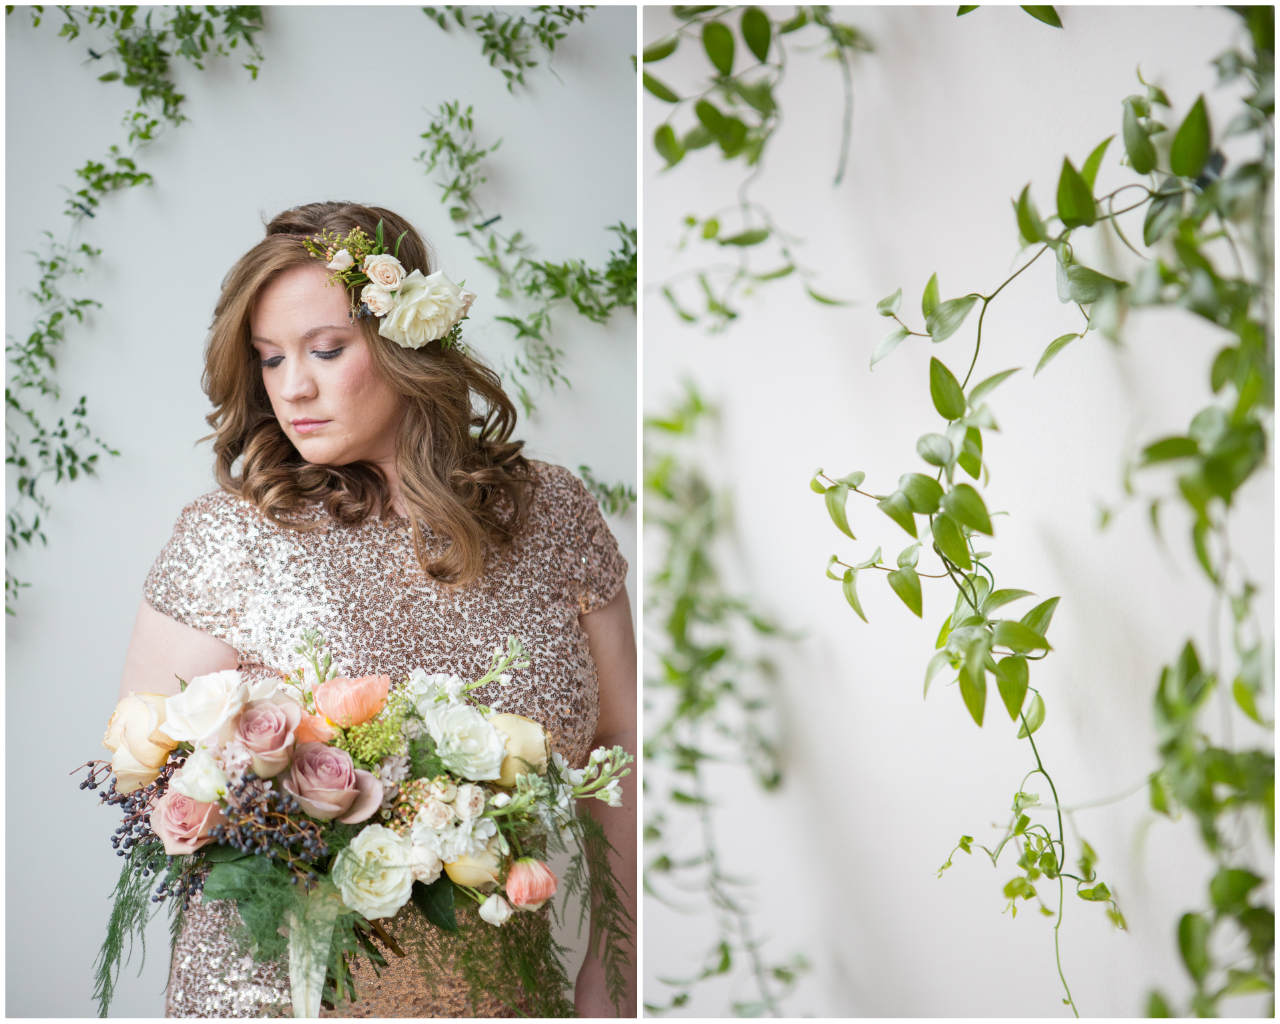 Winter Wedding Flowers | The Day's Design | Hetler Photography